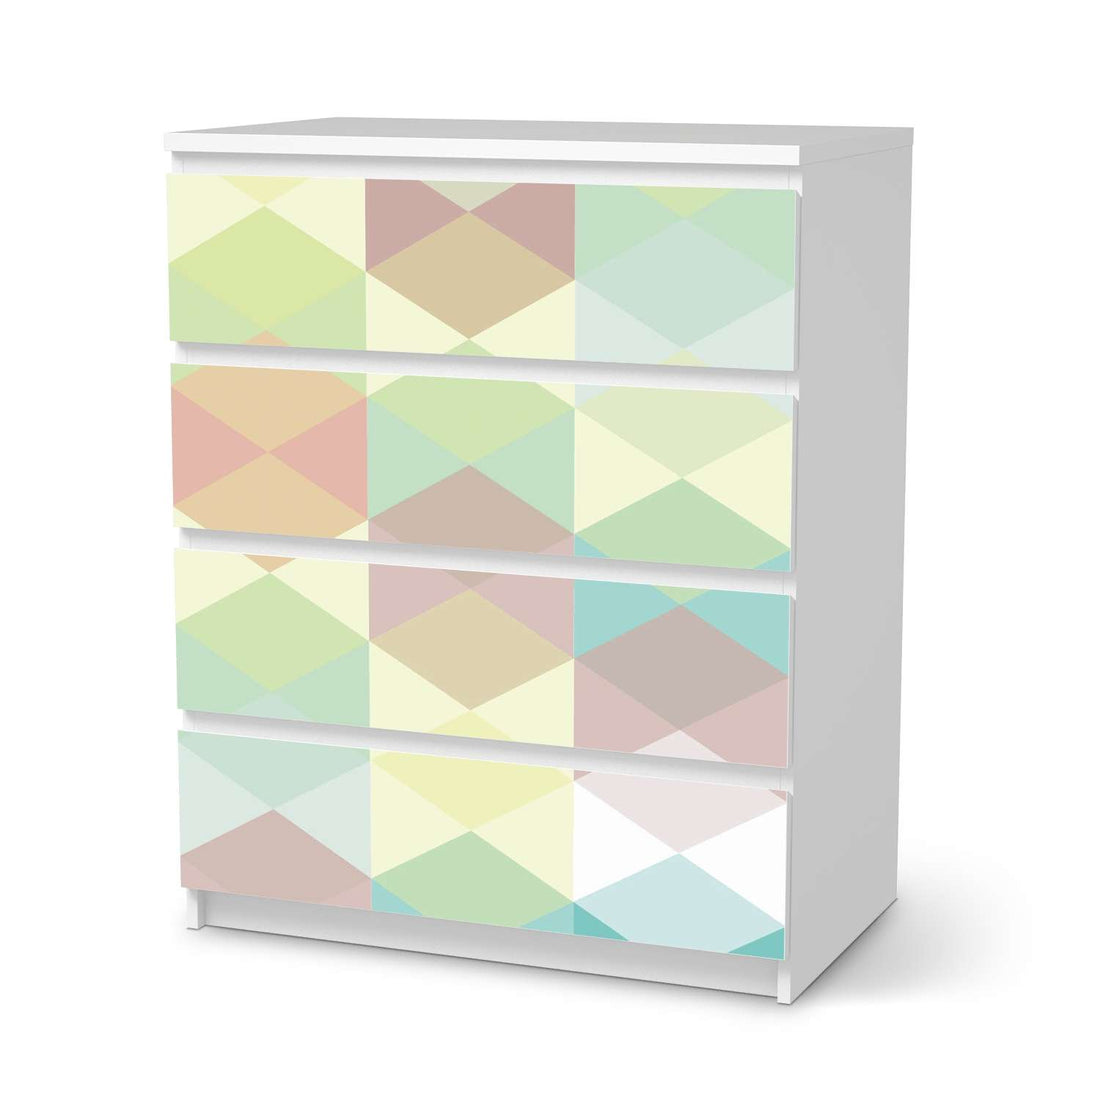 Folie für Möbel Melitta Pastell Geometrie - IKEA Malm Kommode 4 Schubladen  - weiss